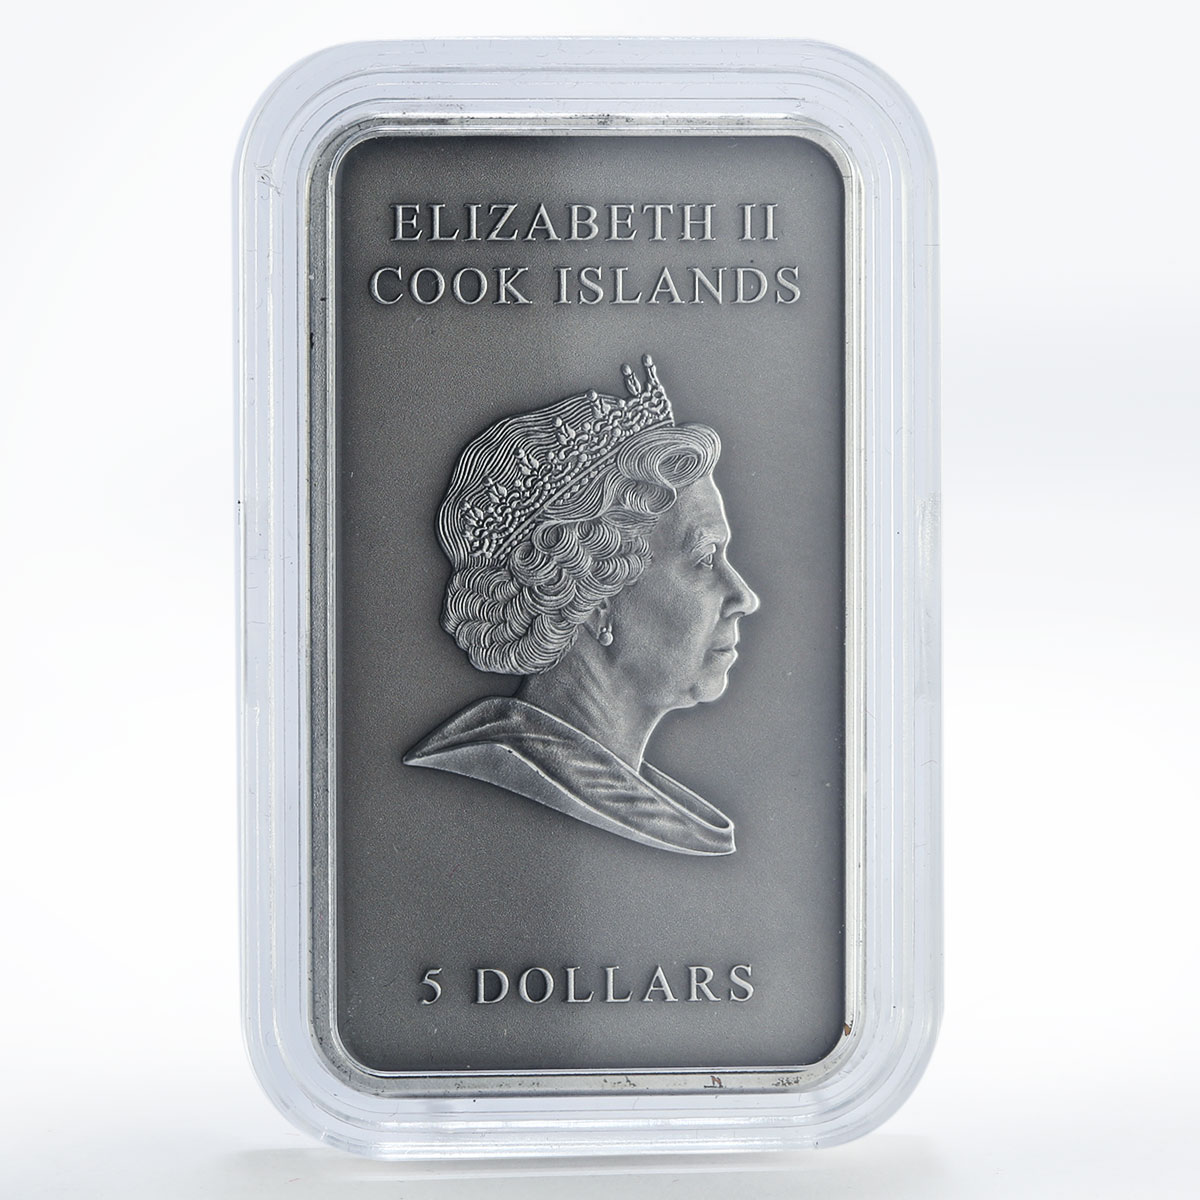 Cook Islands 5 dollars General Nikolay Raevsky War of 1812 silver coin 2010